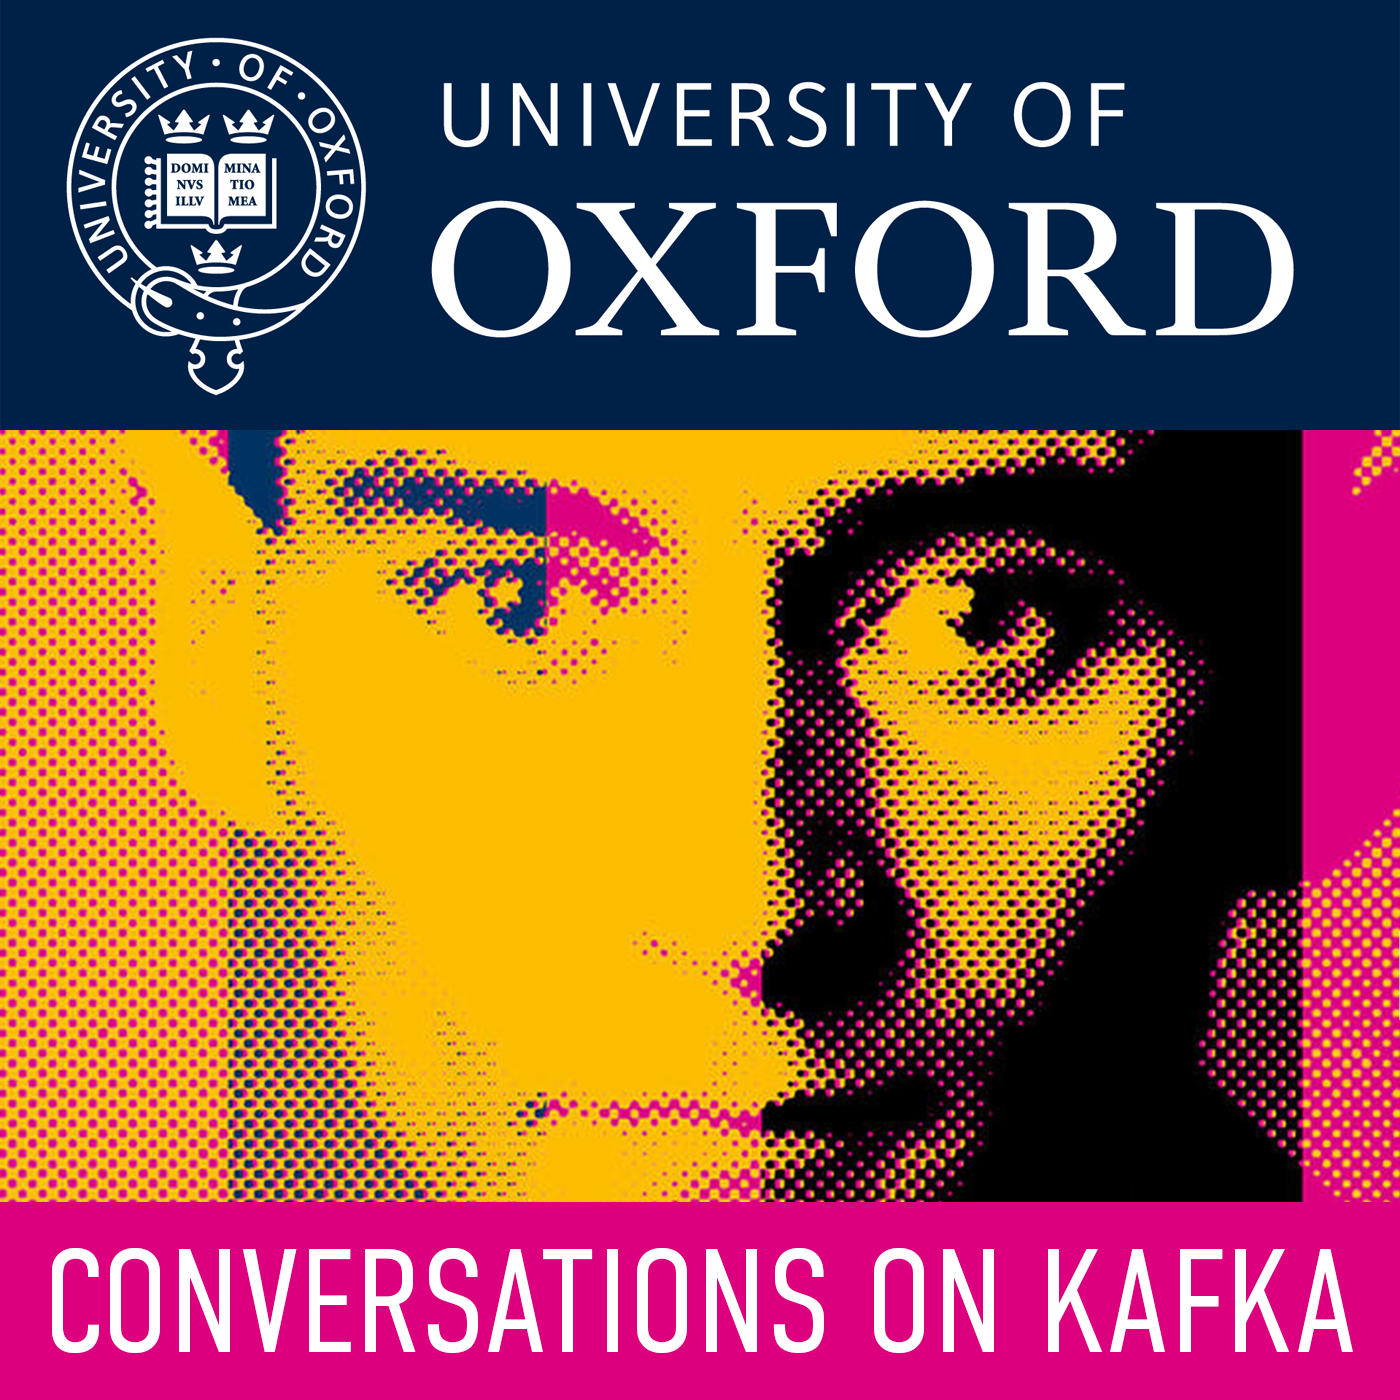 Conversations on Kafka